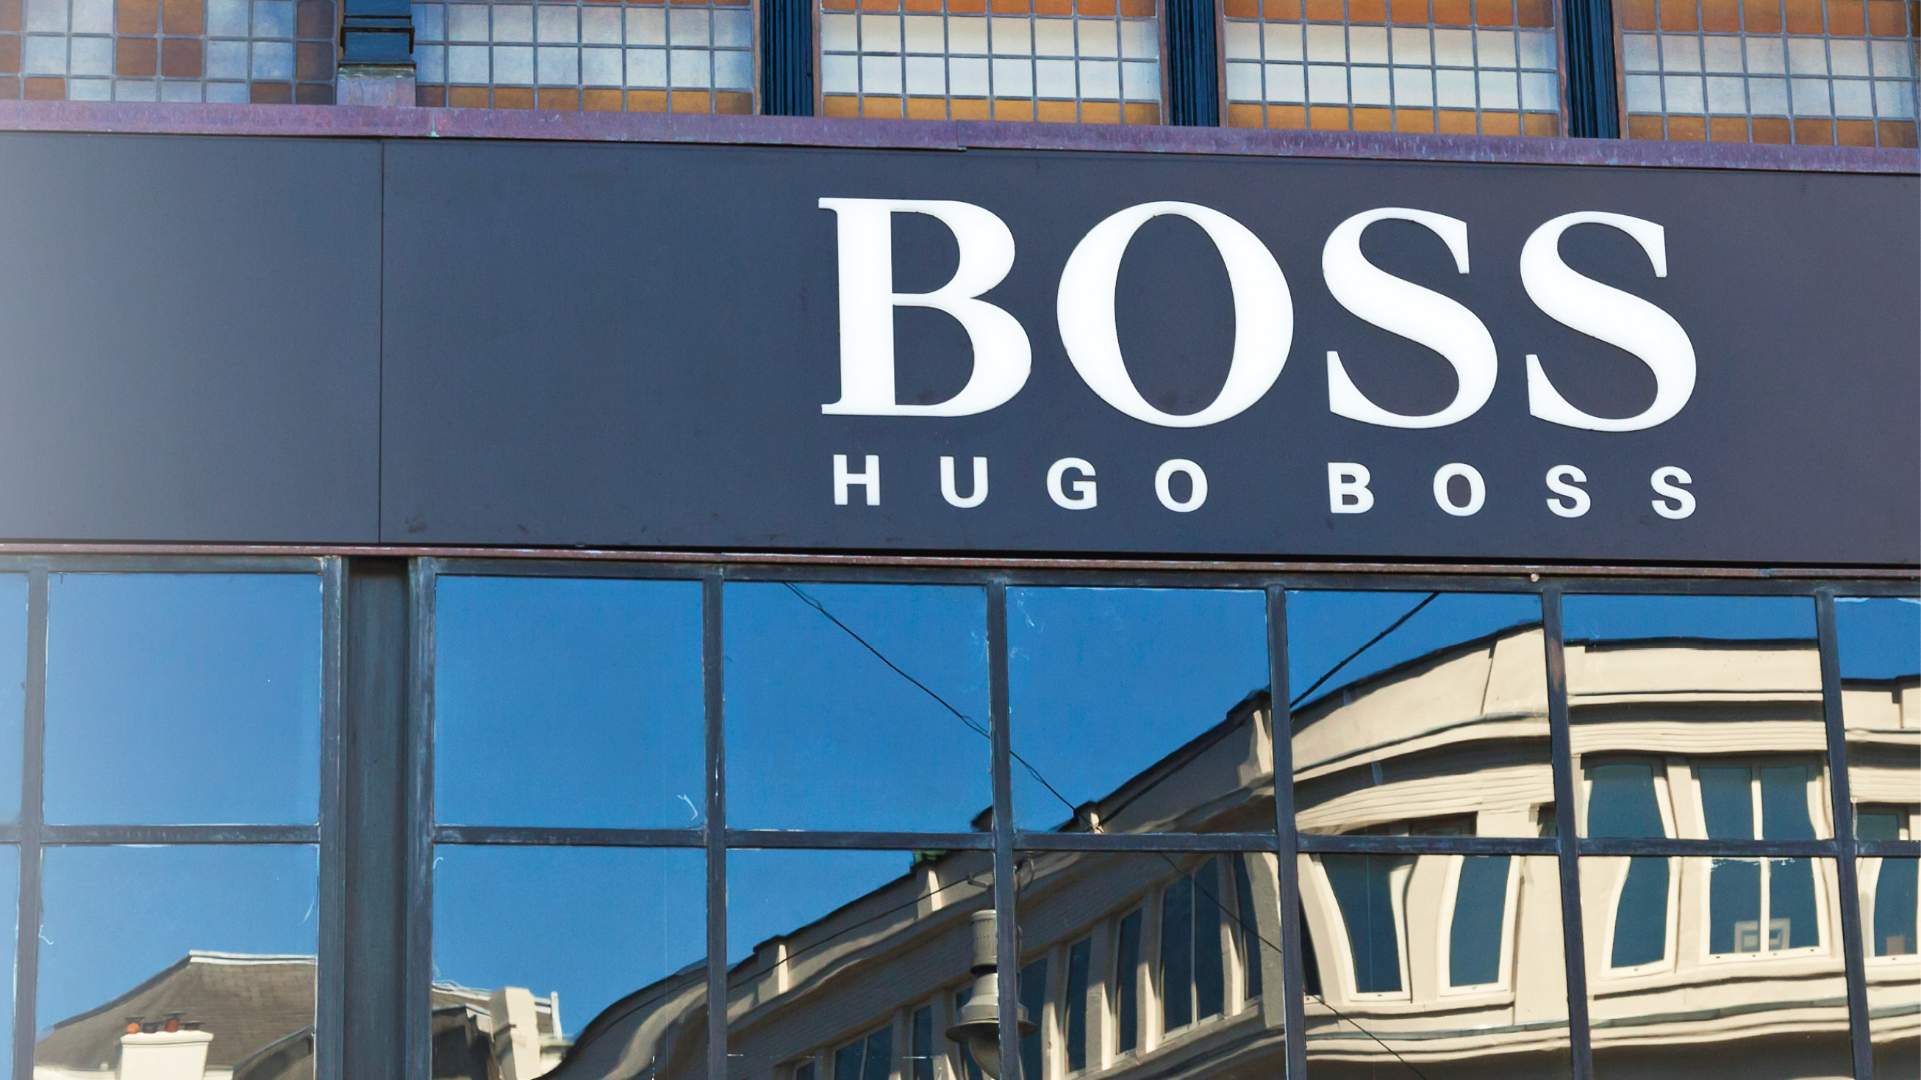 Hugo Boss branch from the outside